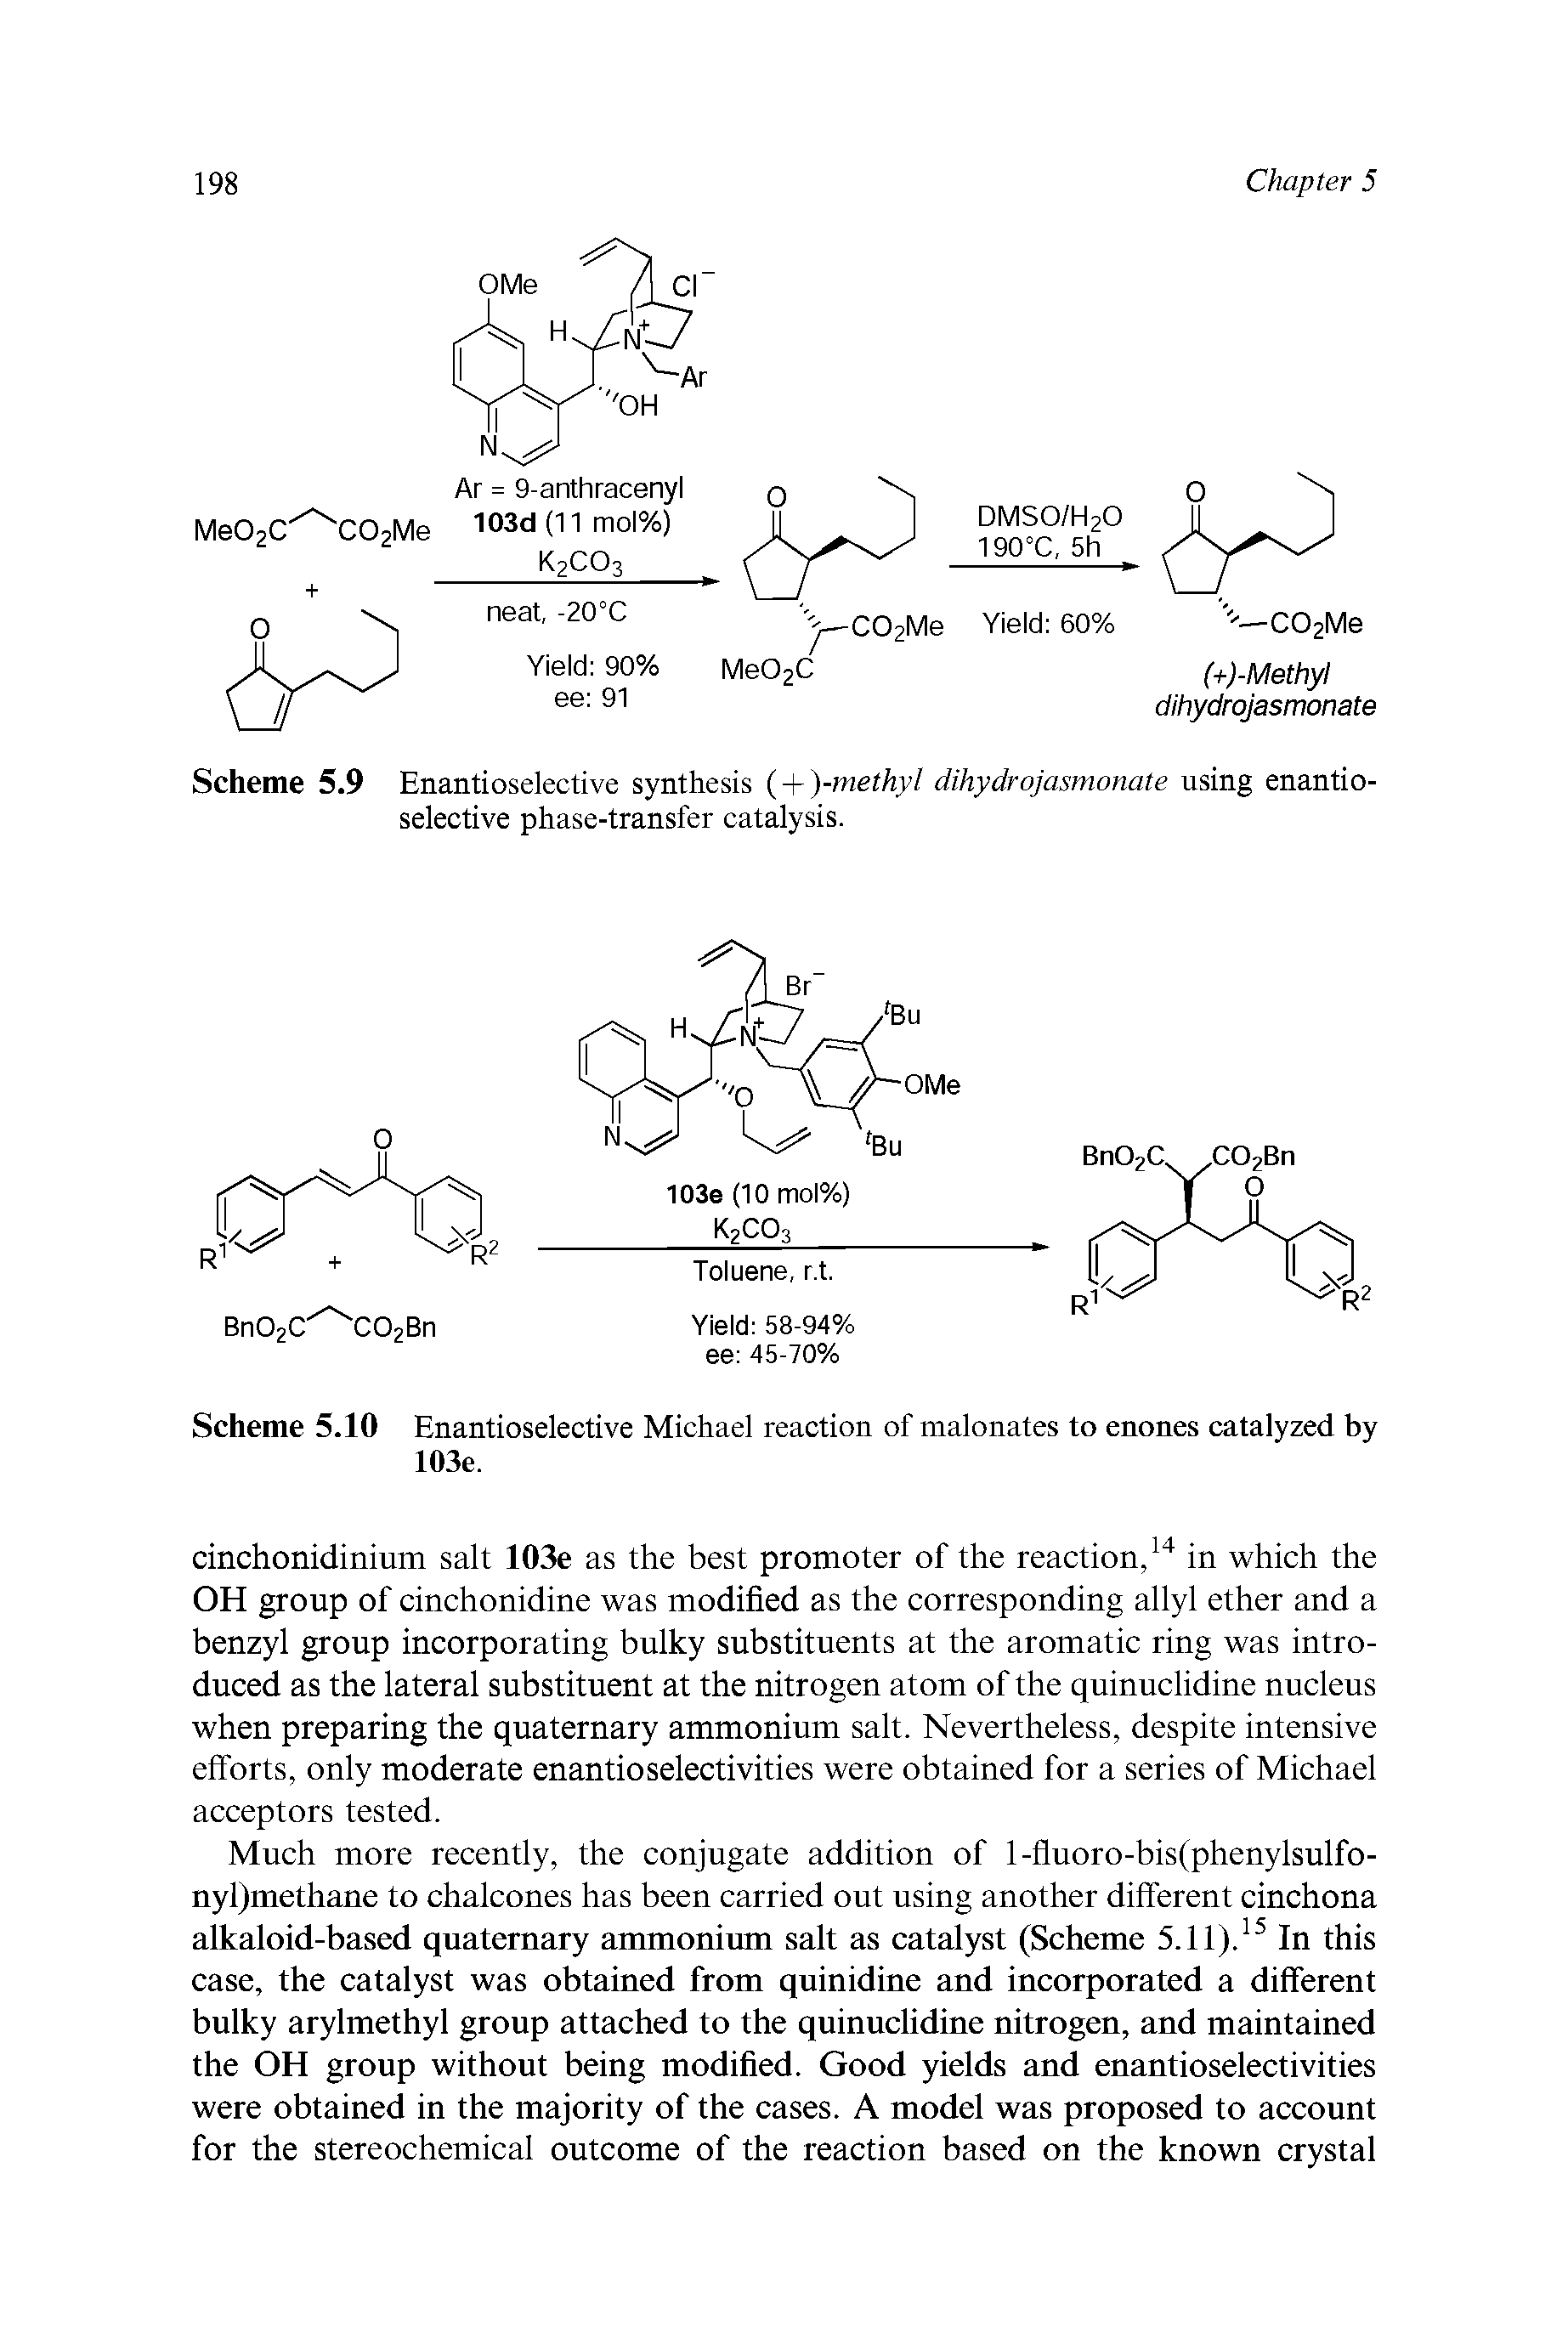 Scheme 5.9 Enantioselective synthesis (+ )-methyl dihydrojasmonate using enantio-selective phase-transfer catalysis.